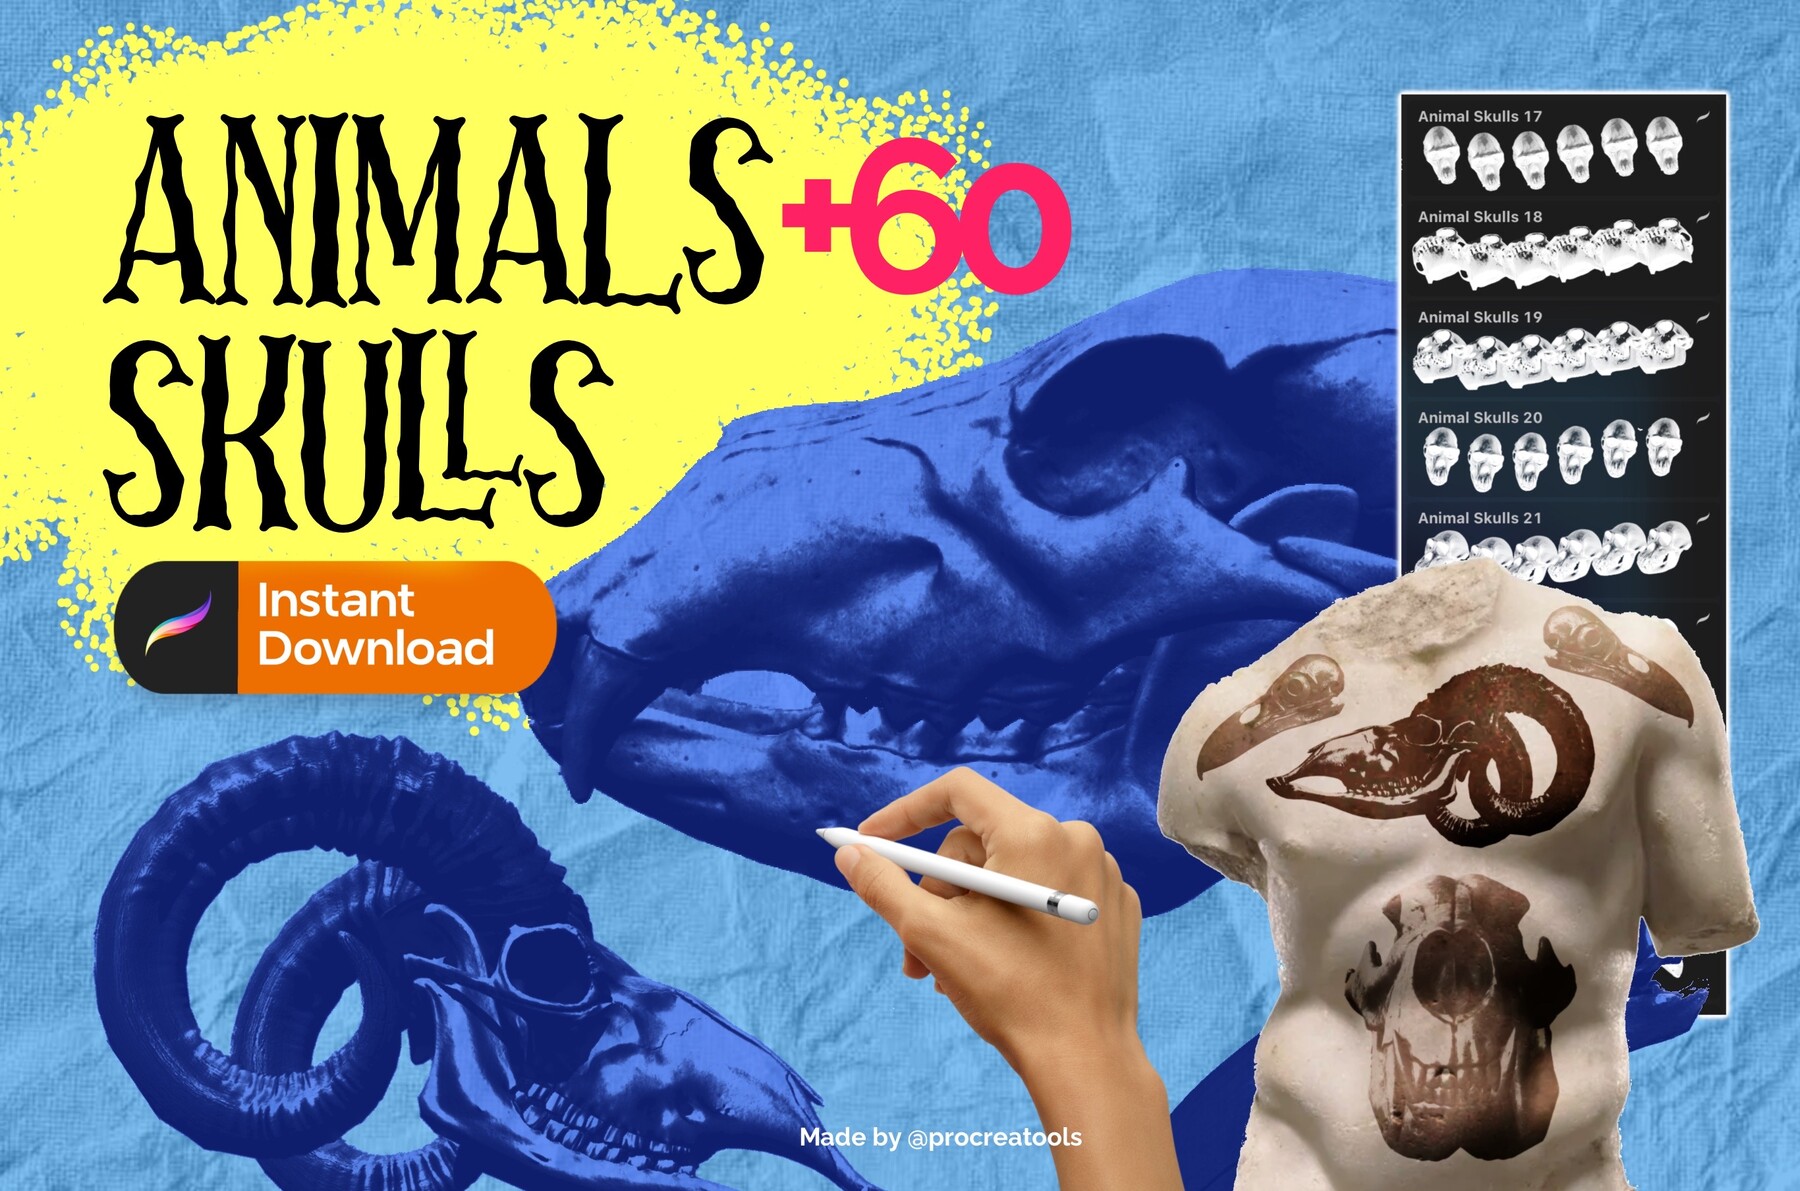 ArtStation - Animals skull procreate brushes stamps tattoo | Brushes